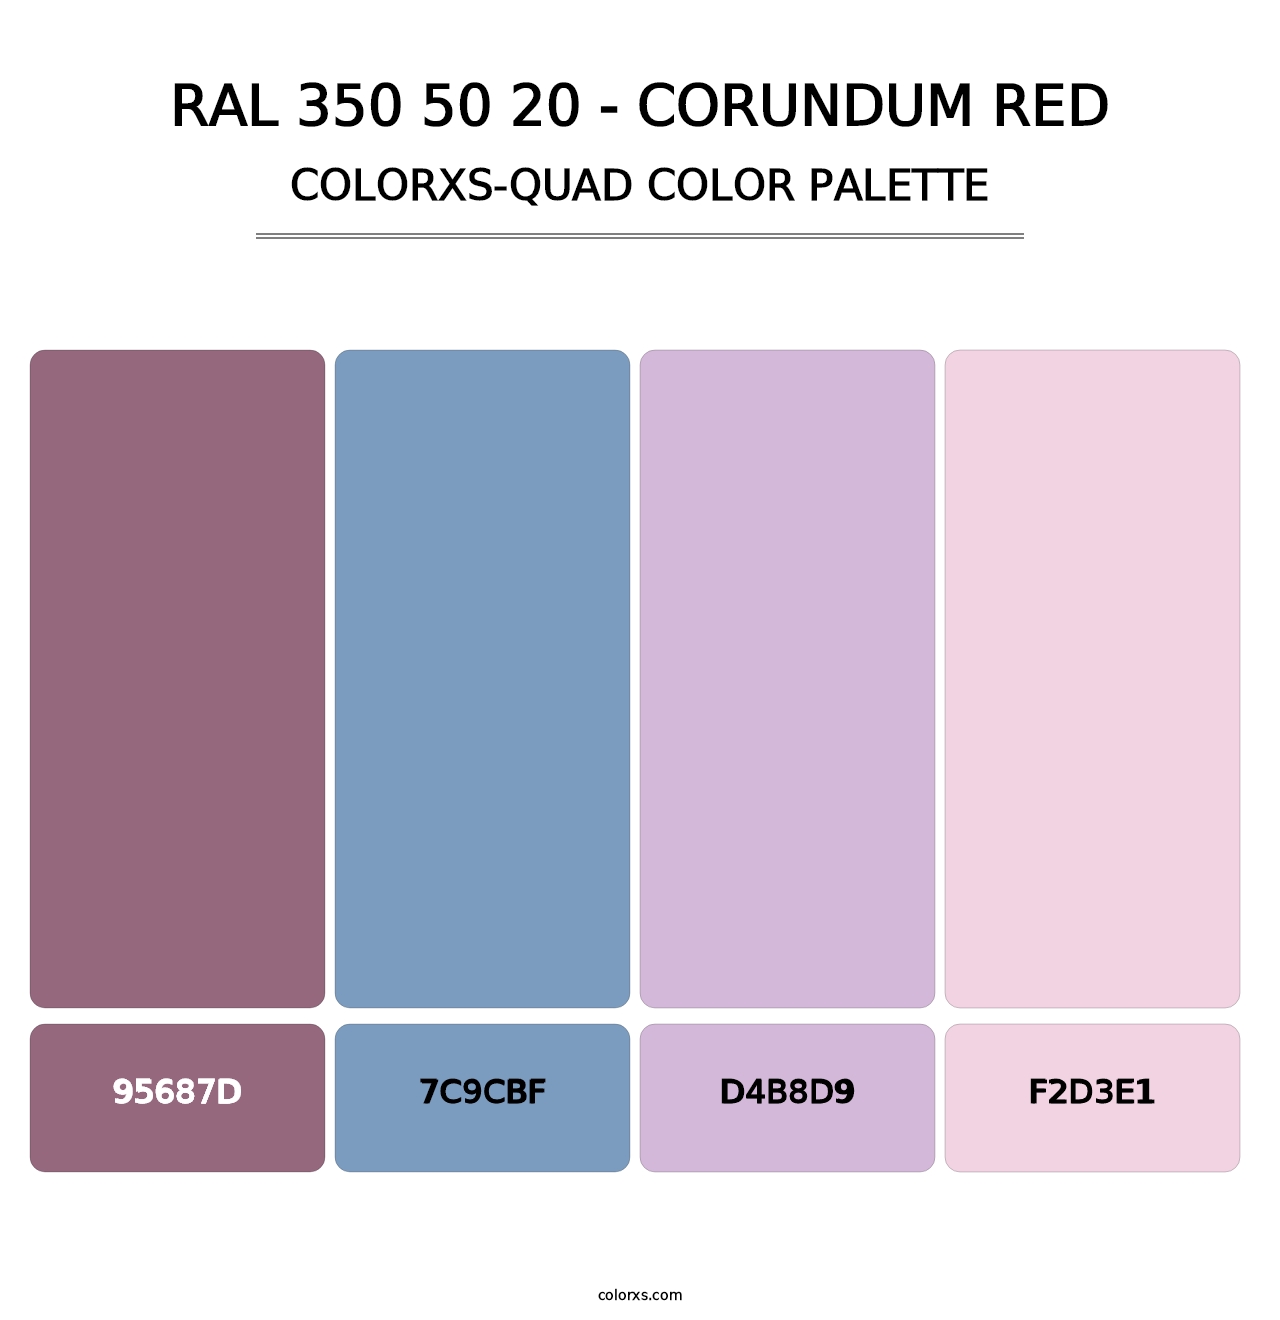 RAL 350 50 20 - Corundum Red - Colorxs Quad Palette